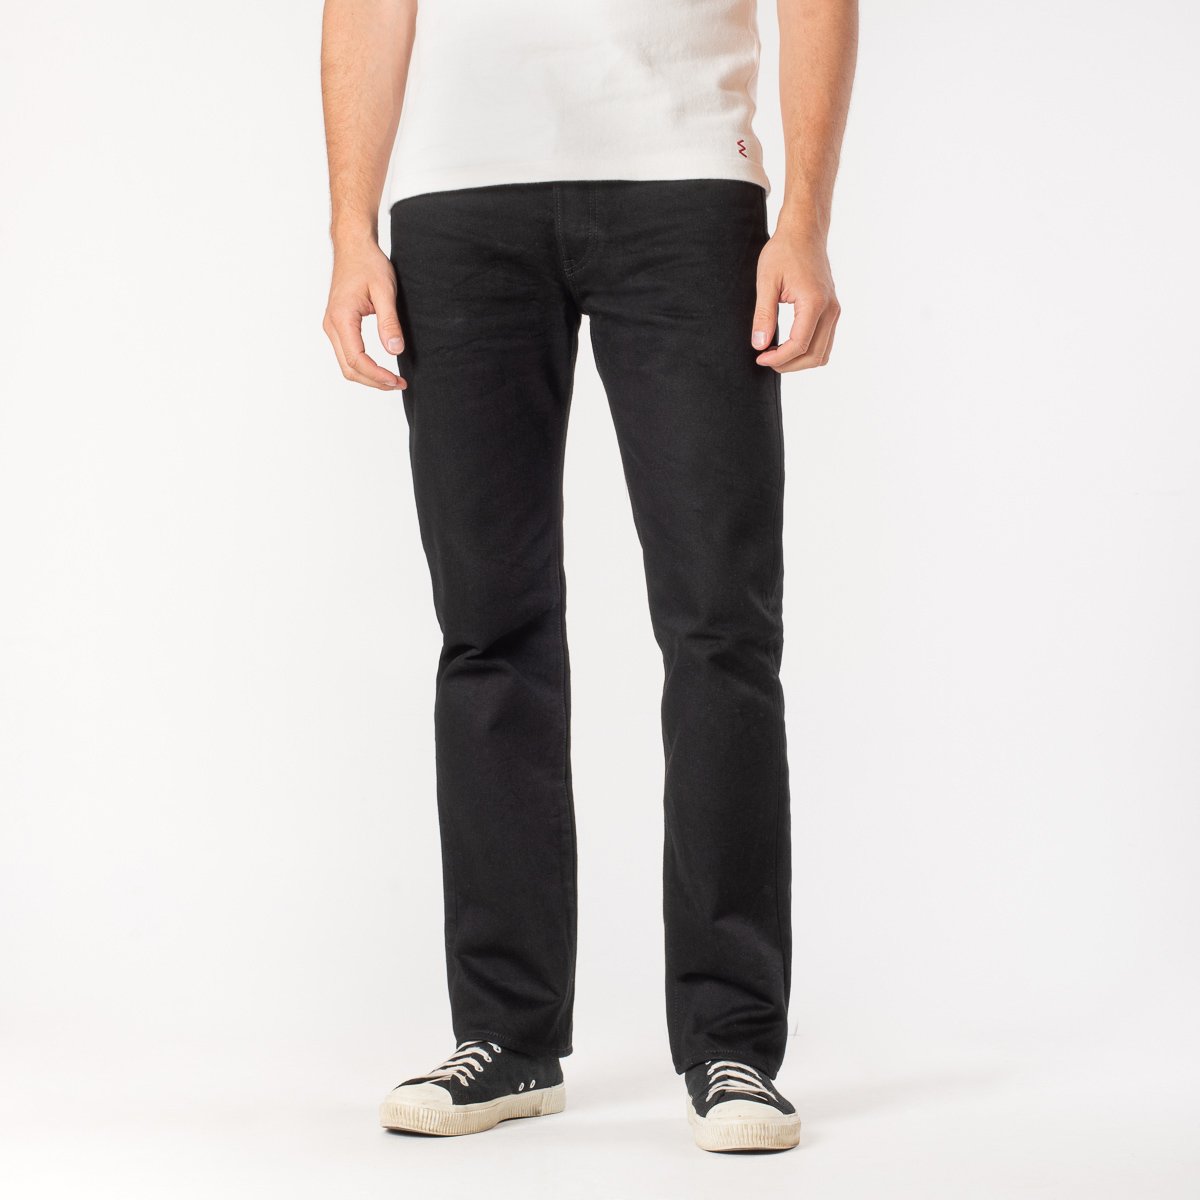 14oz Selvedge Denim Slim Straight Cut Jeans - Black/Black